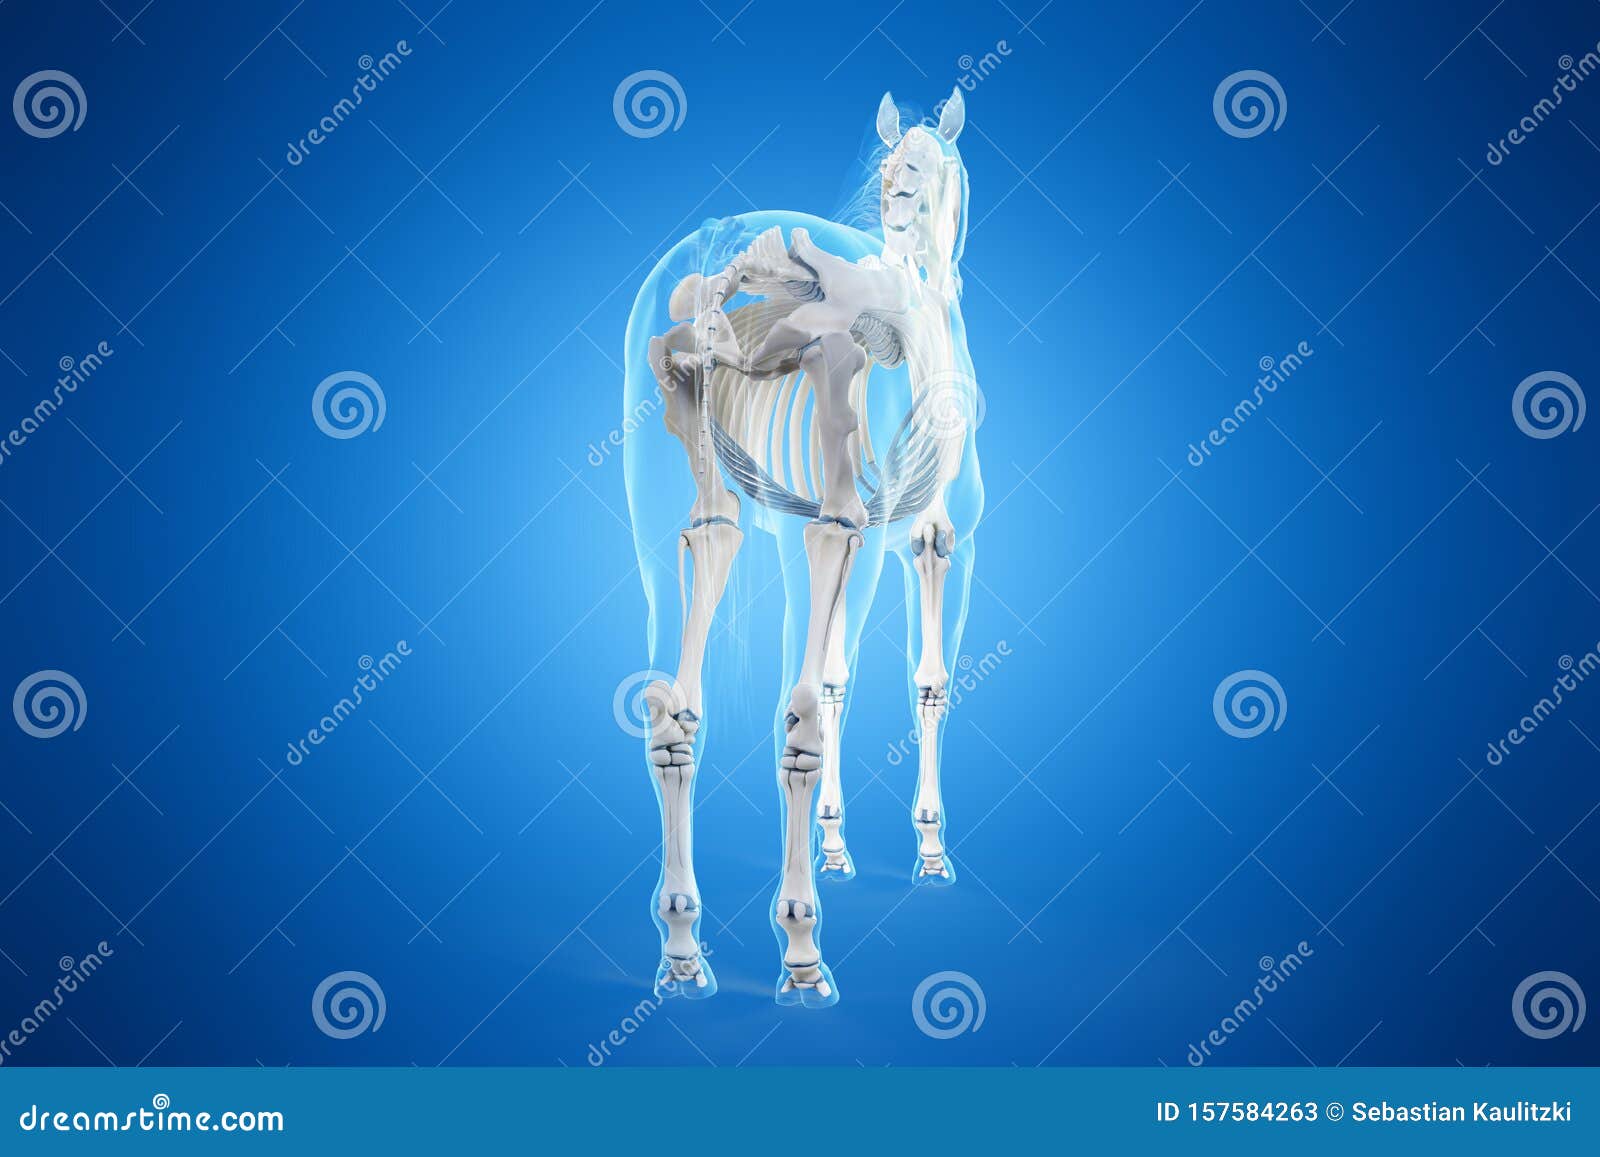 A horses skeleton stock illustration. Illustration of equine - 157584263